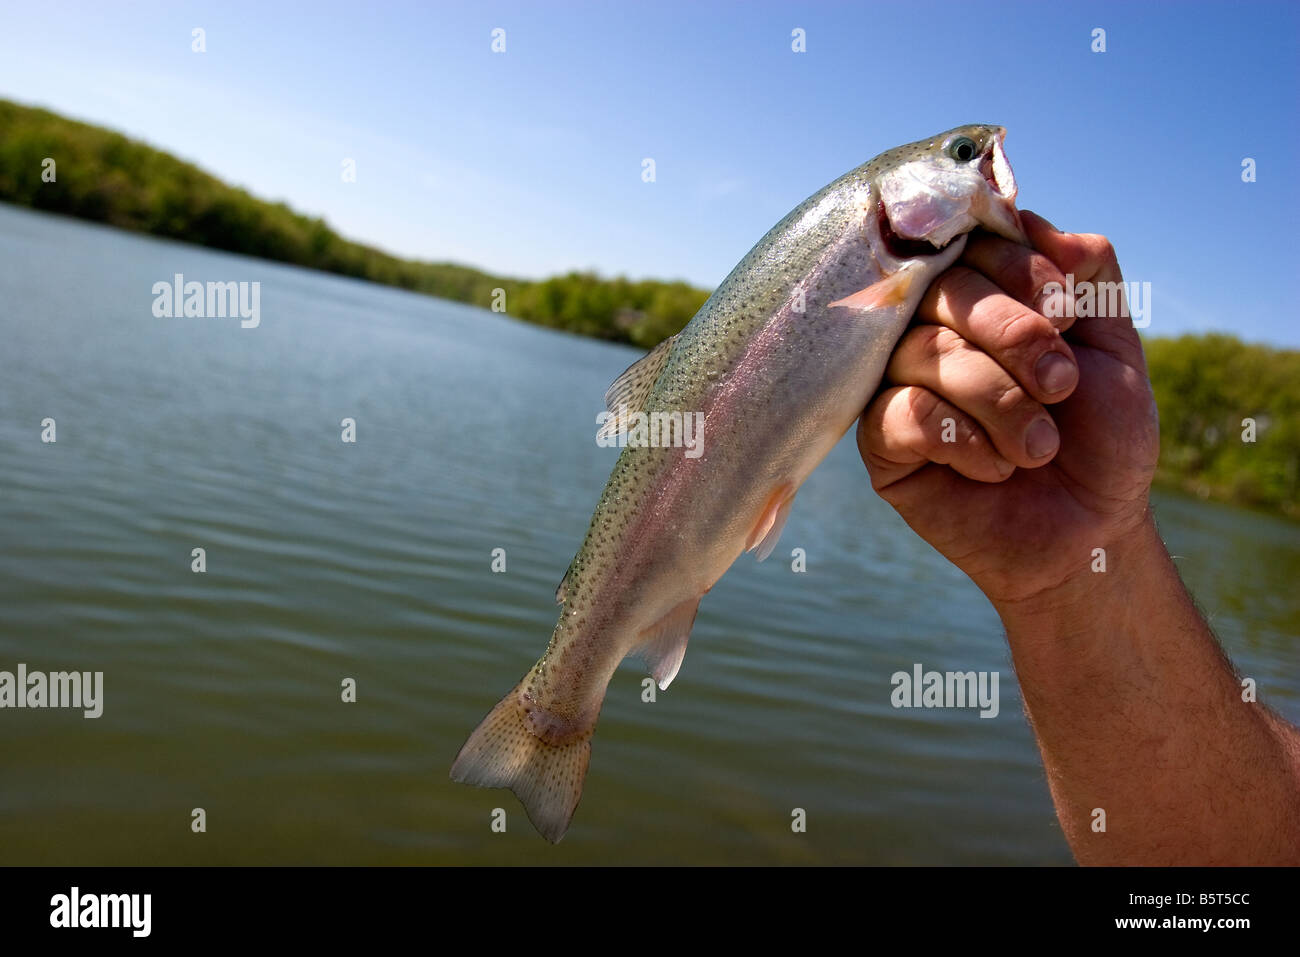 https://c8.alamy.com/comp/B5T5CC/a-man-holds-a-rainbow-trout-caught-at-lake-brittany-in-bella-vista-B5T5CC.jpg